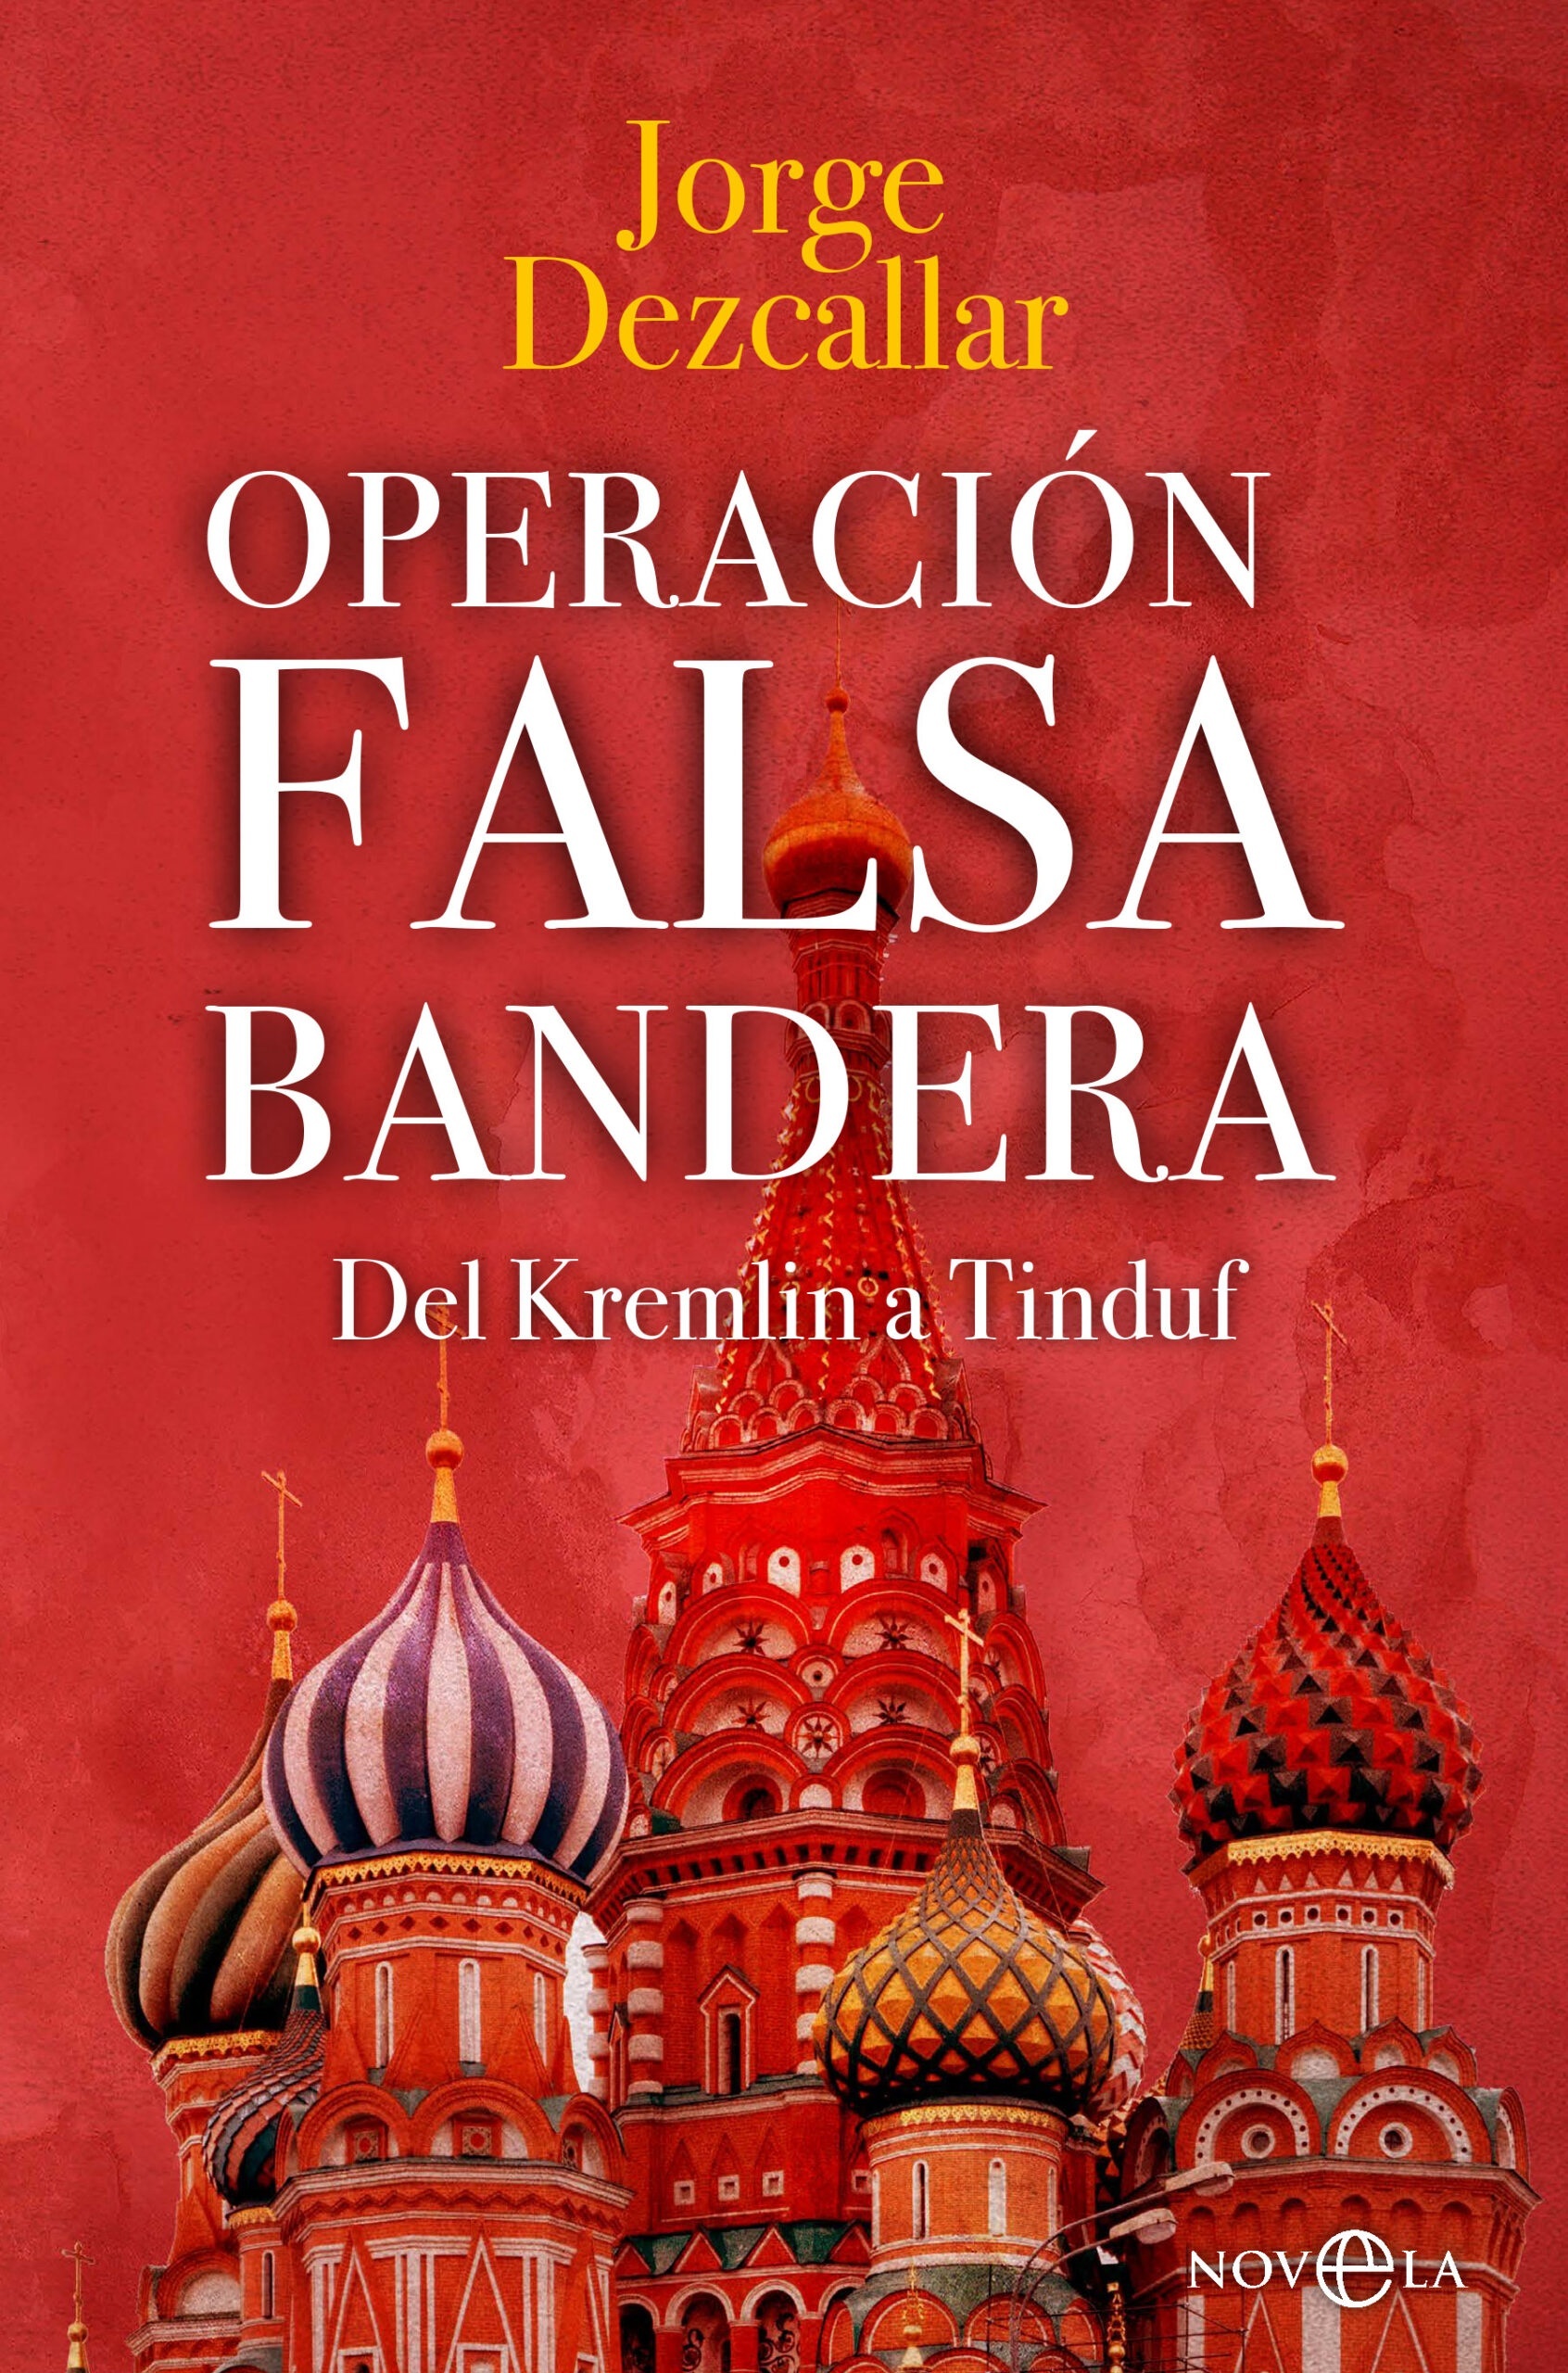 Operación Falsa Bandera "Del Kremlin a Tinduf"